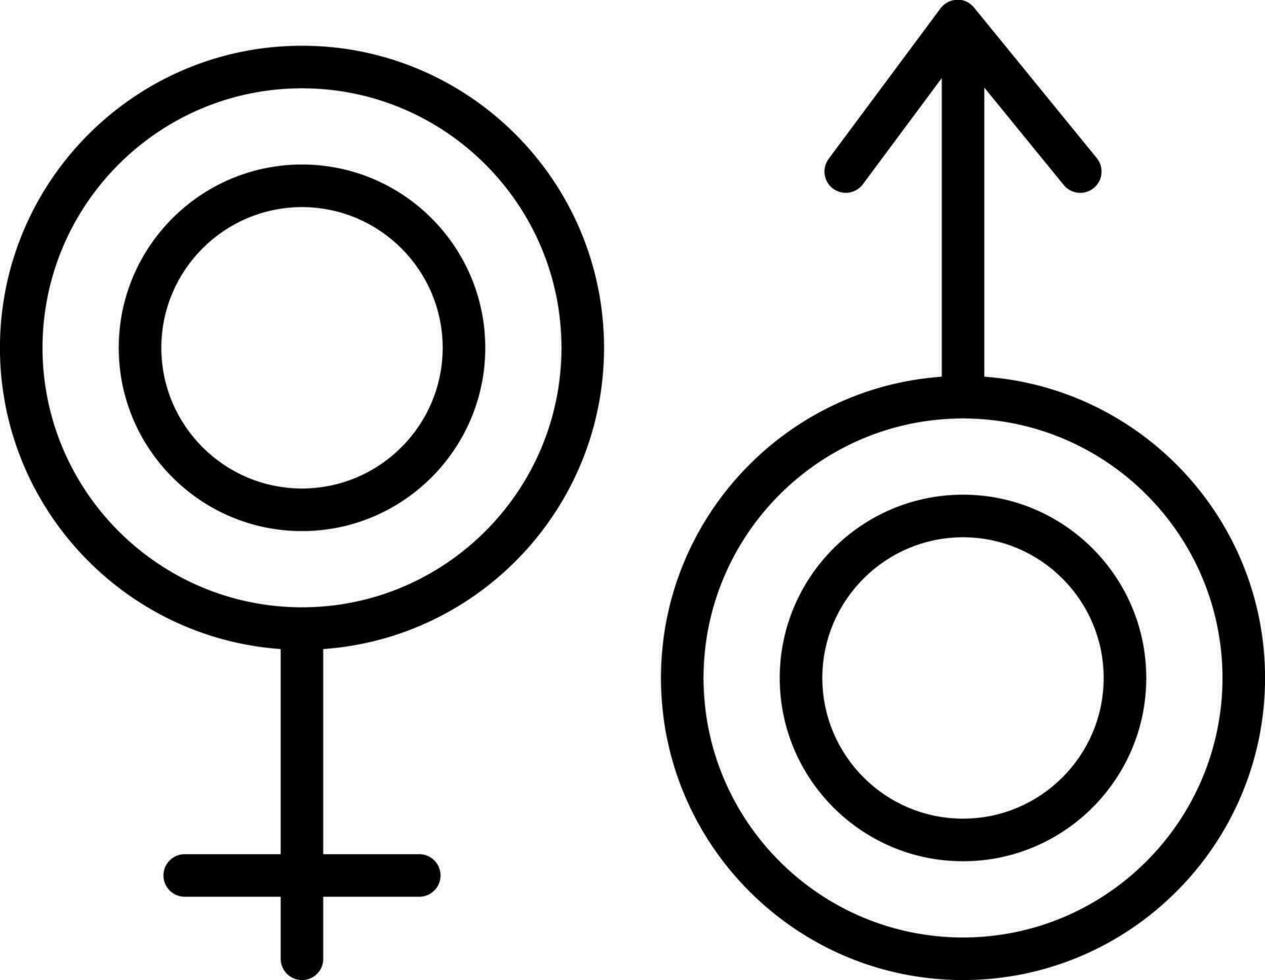 masculino y hembra género firmar o símbolo en Delgado línea Arte. vector